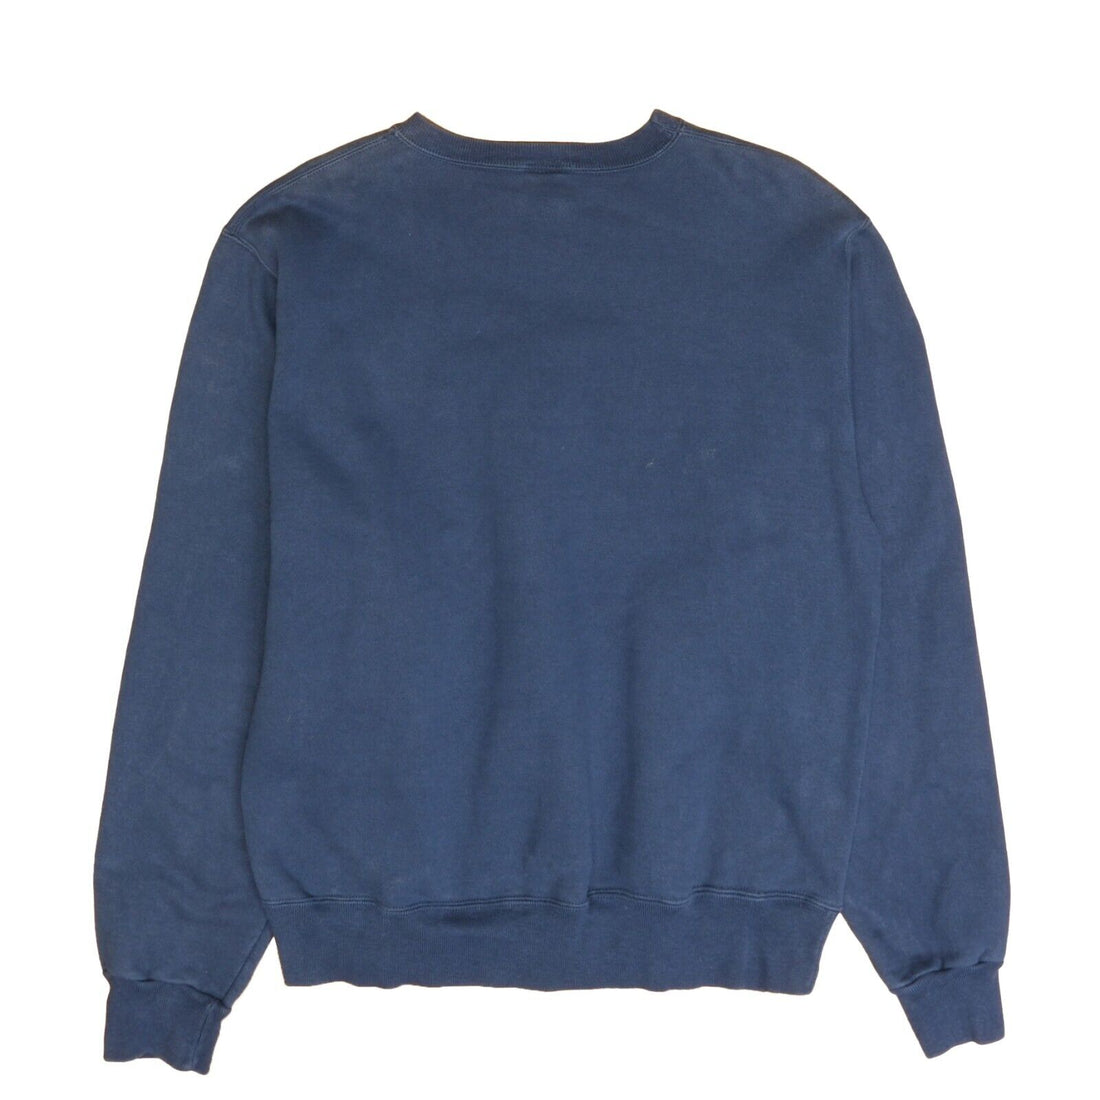 Vintage Champion Sweatshirt Crewneck Size Large Blue 80s